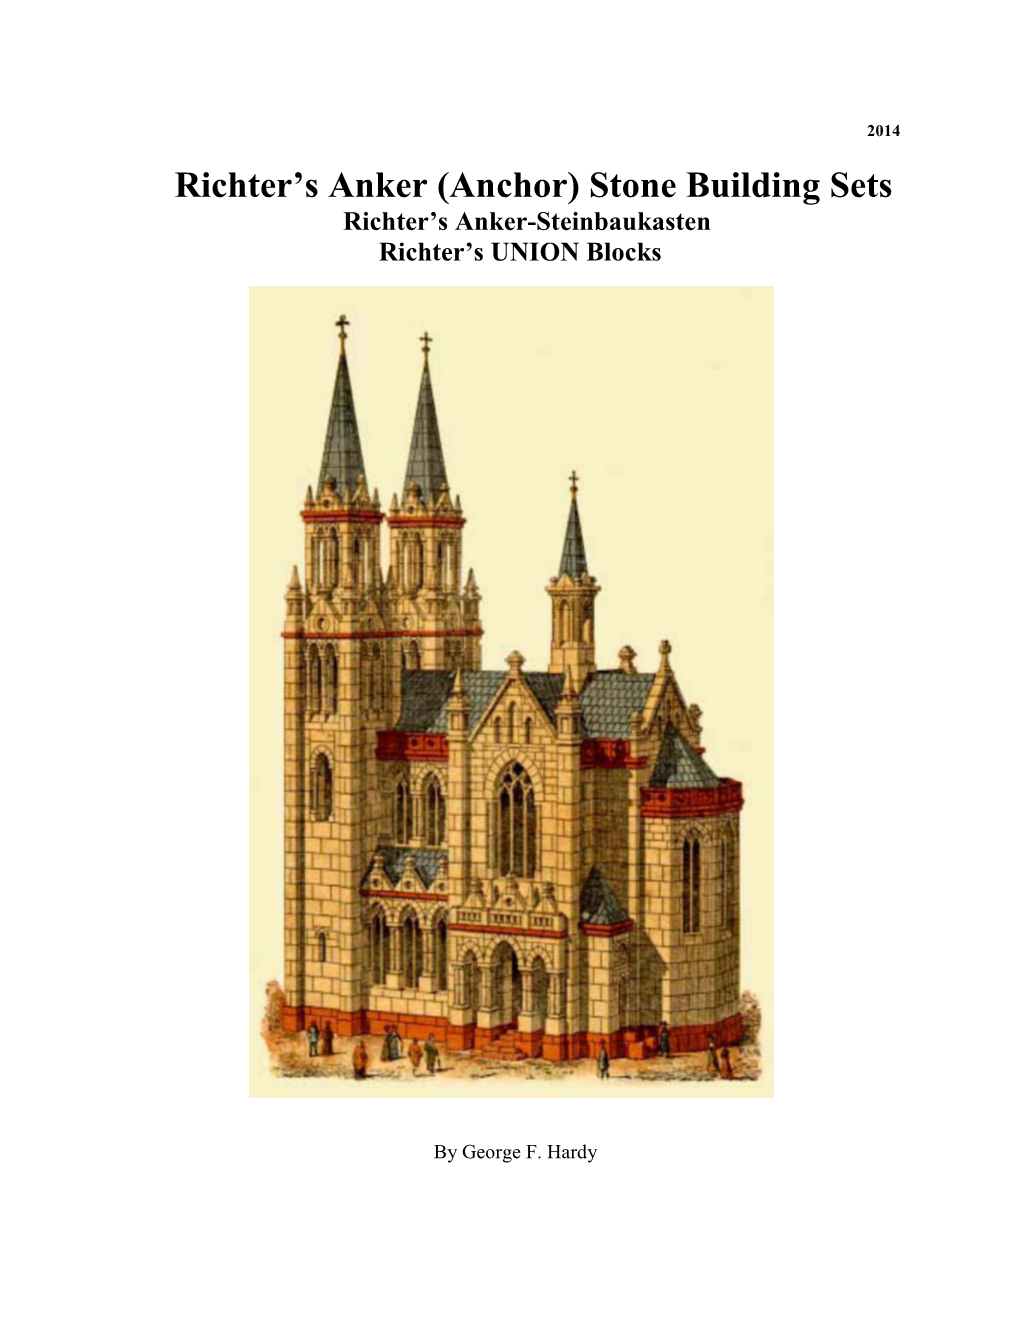 (Anchor) Stone Building Sets Richter’S Anker-Steinbaukasten Richter’S UNION Blocks